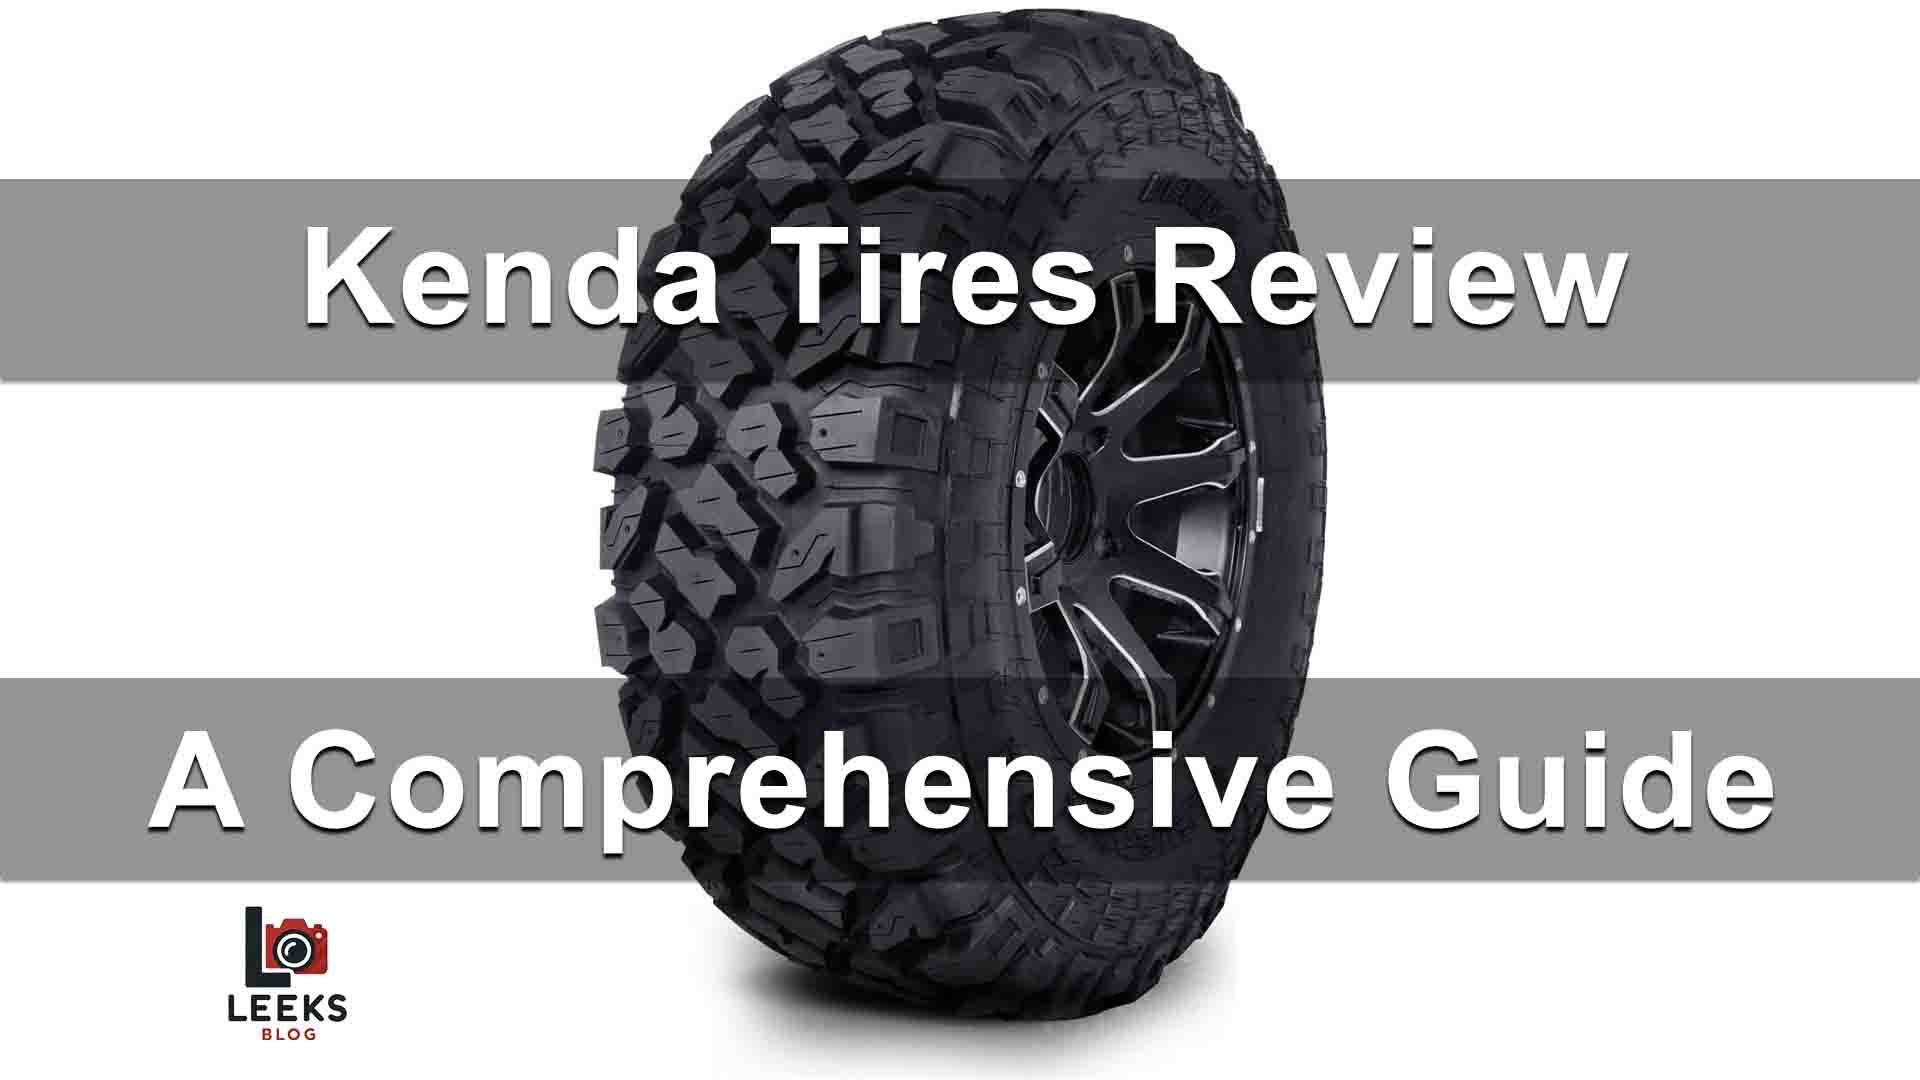 Kenda Tires Review: A Comprehensive Guide